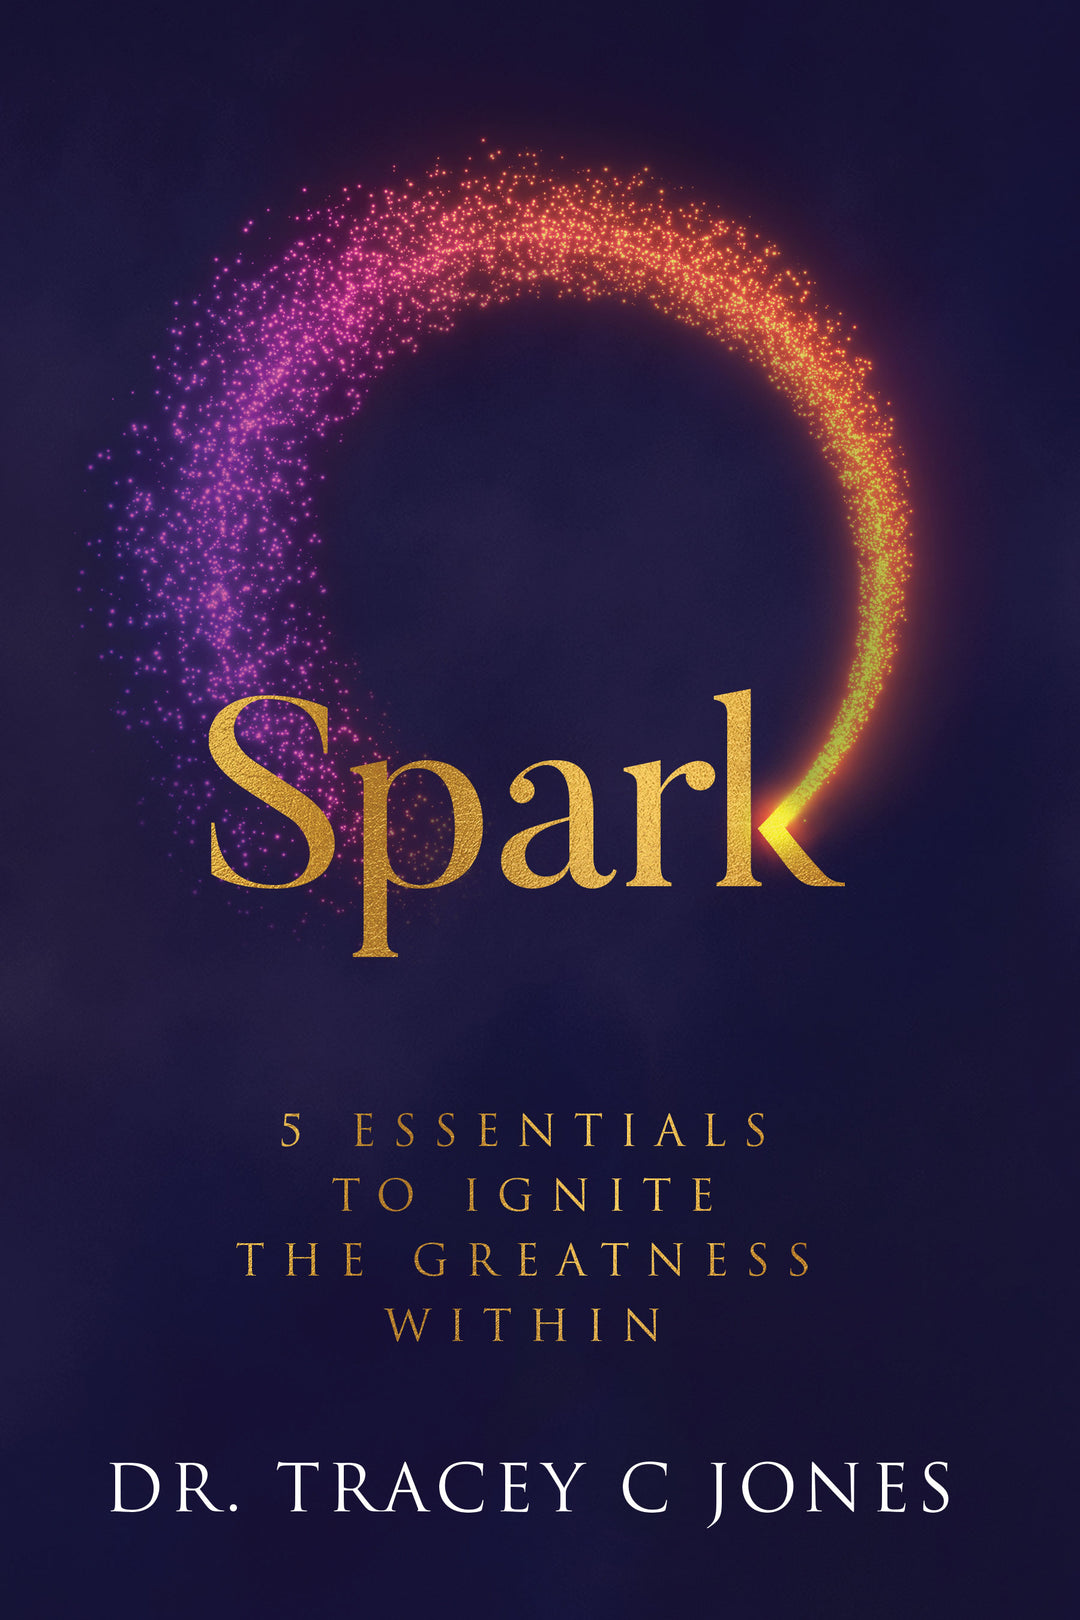 SPARK – Tremendous Leadership